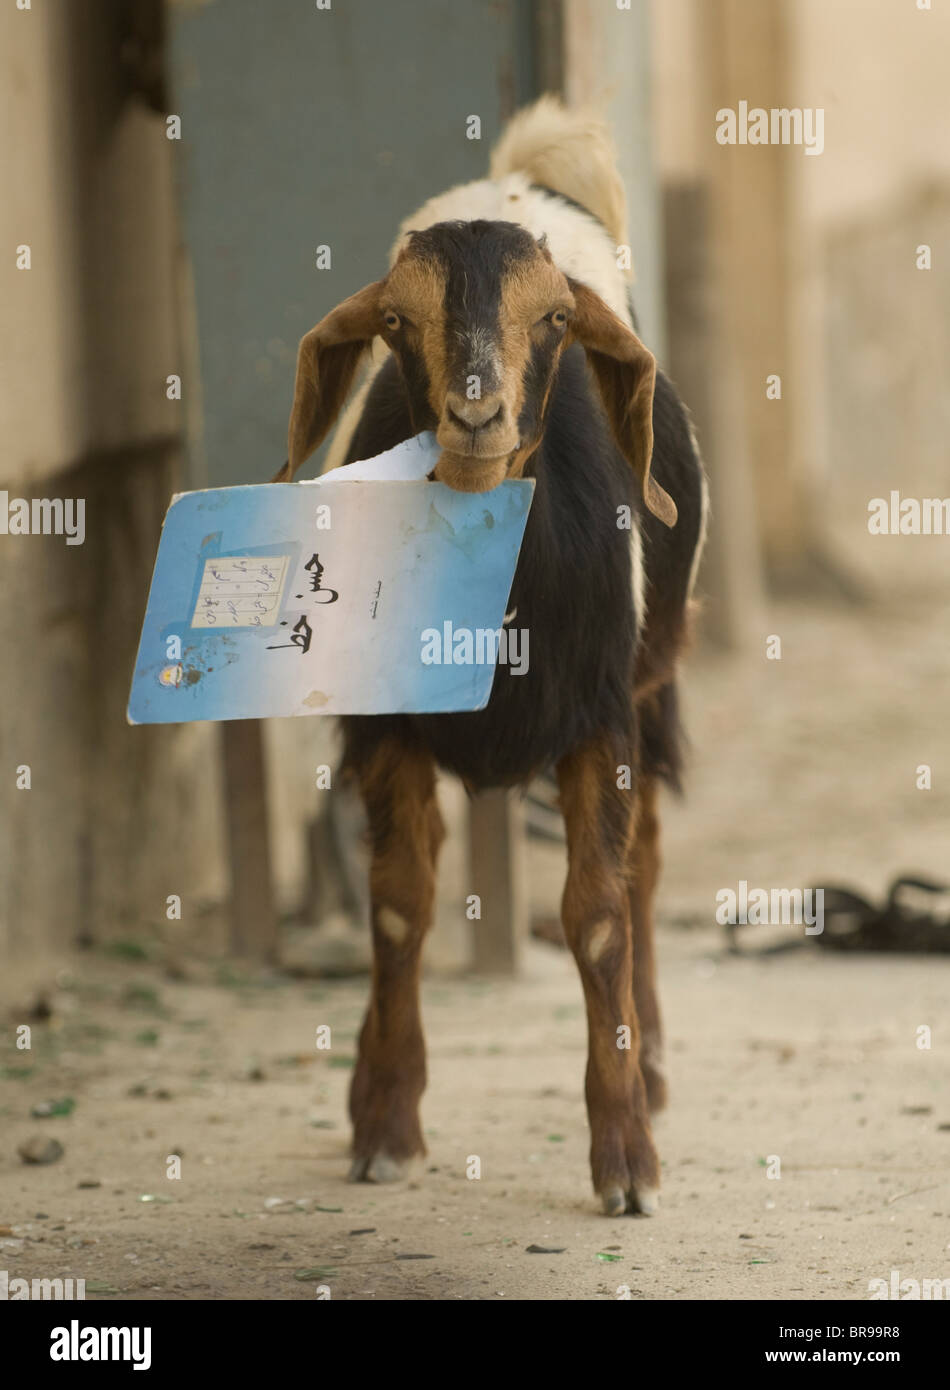 Capra mangia la carta dal cestino. Kabul, Afghanistan Foto stock - Alamy